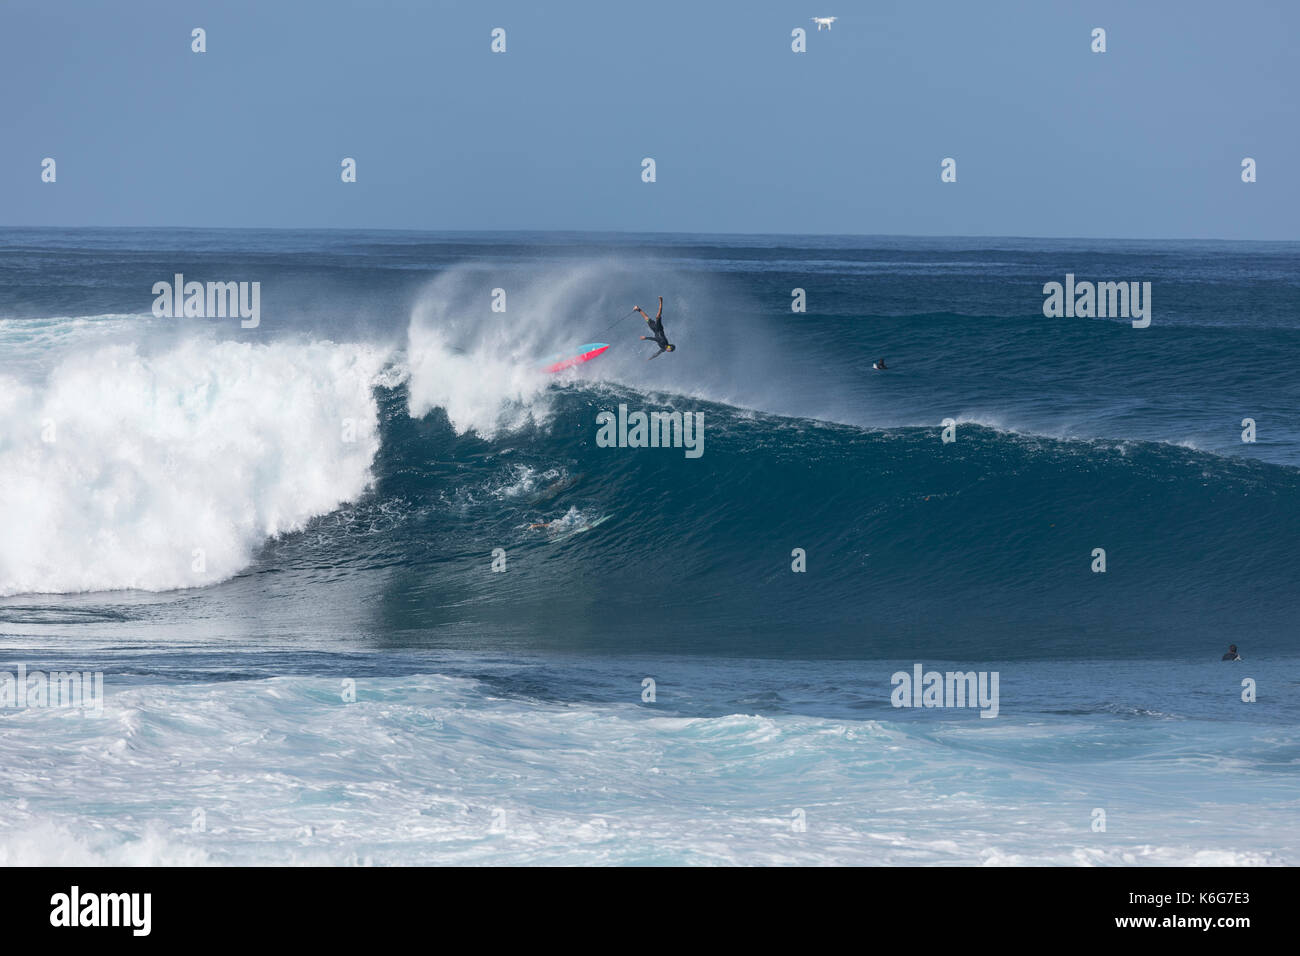 Surfer riding big wave at Banzai Pipeline, Oahu, Hawaii, USA Stock Photo